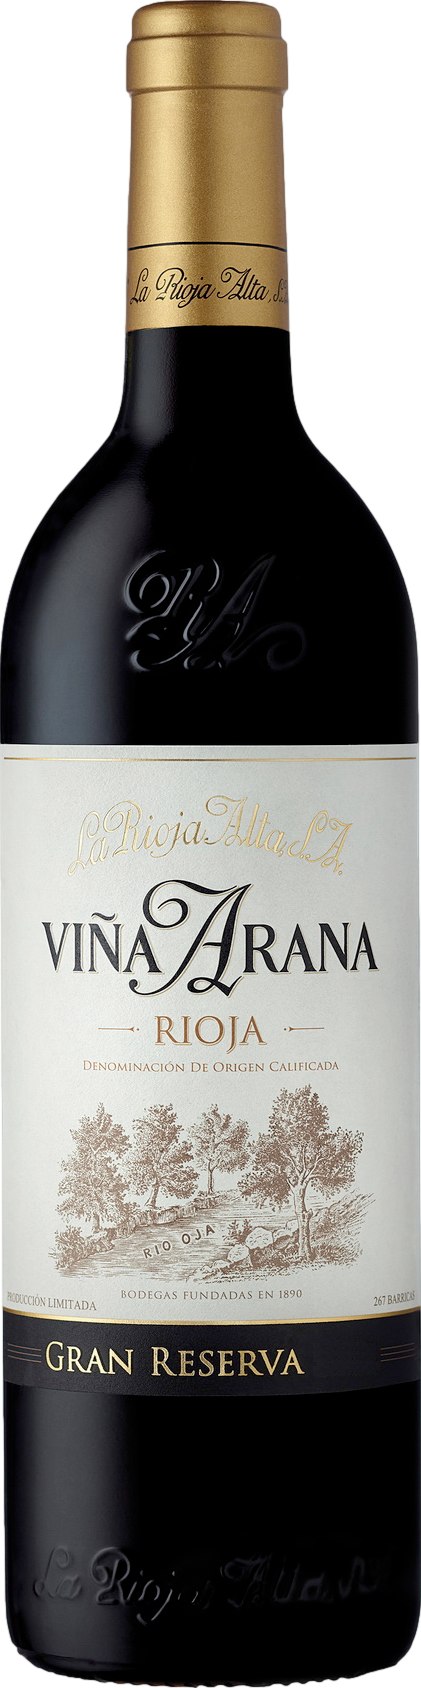 2016 günstig Kaufen-La Rioja Alta Gran Reserva Vina Arana 2016. La Rioja Alta Gran Reserva Vina Arana 2016 . 